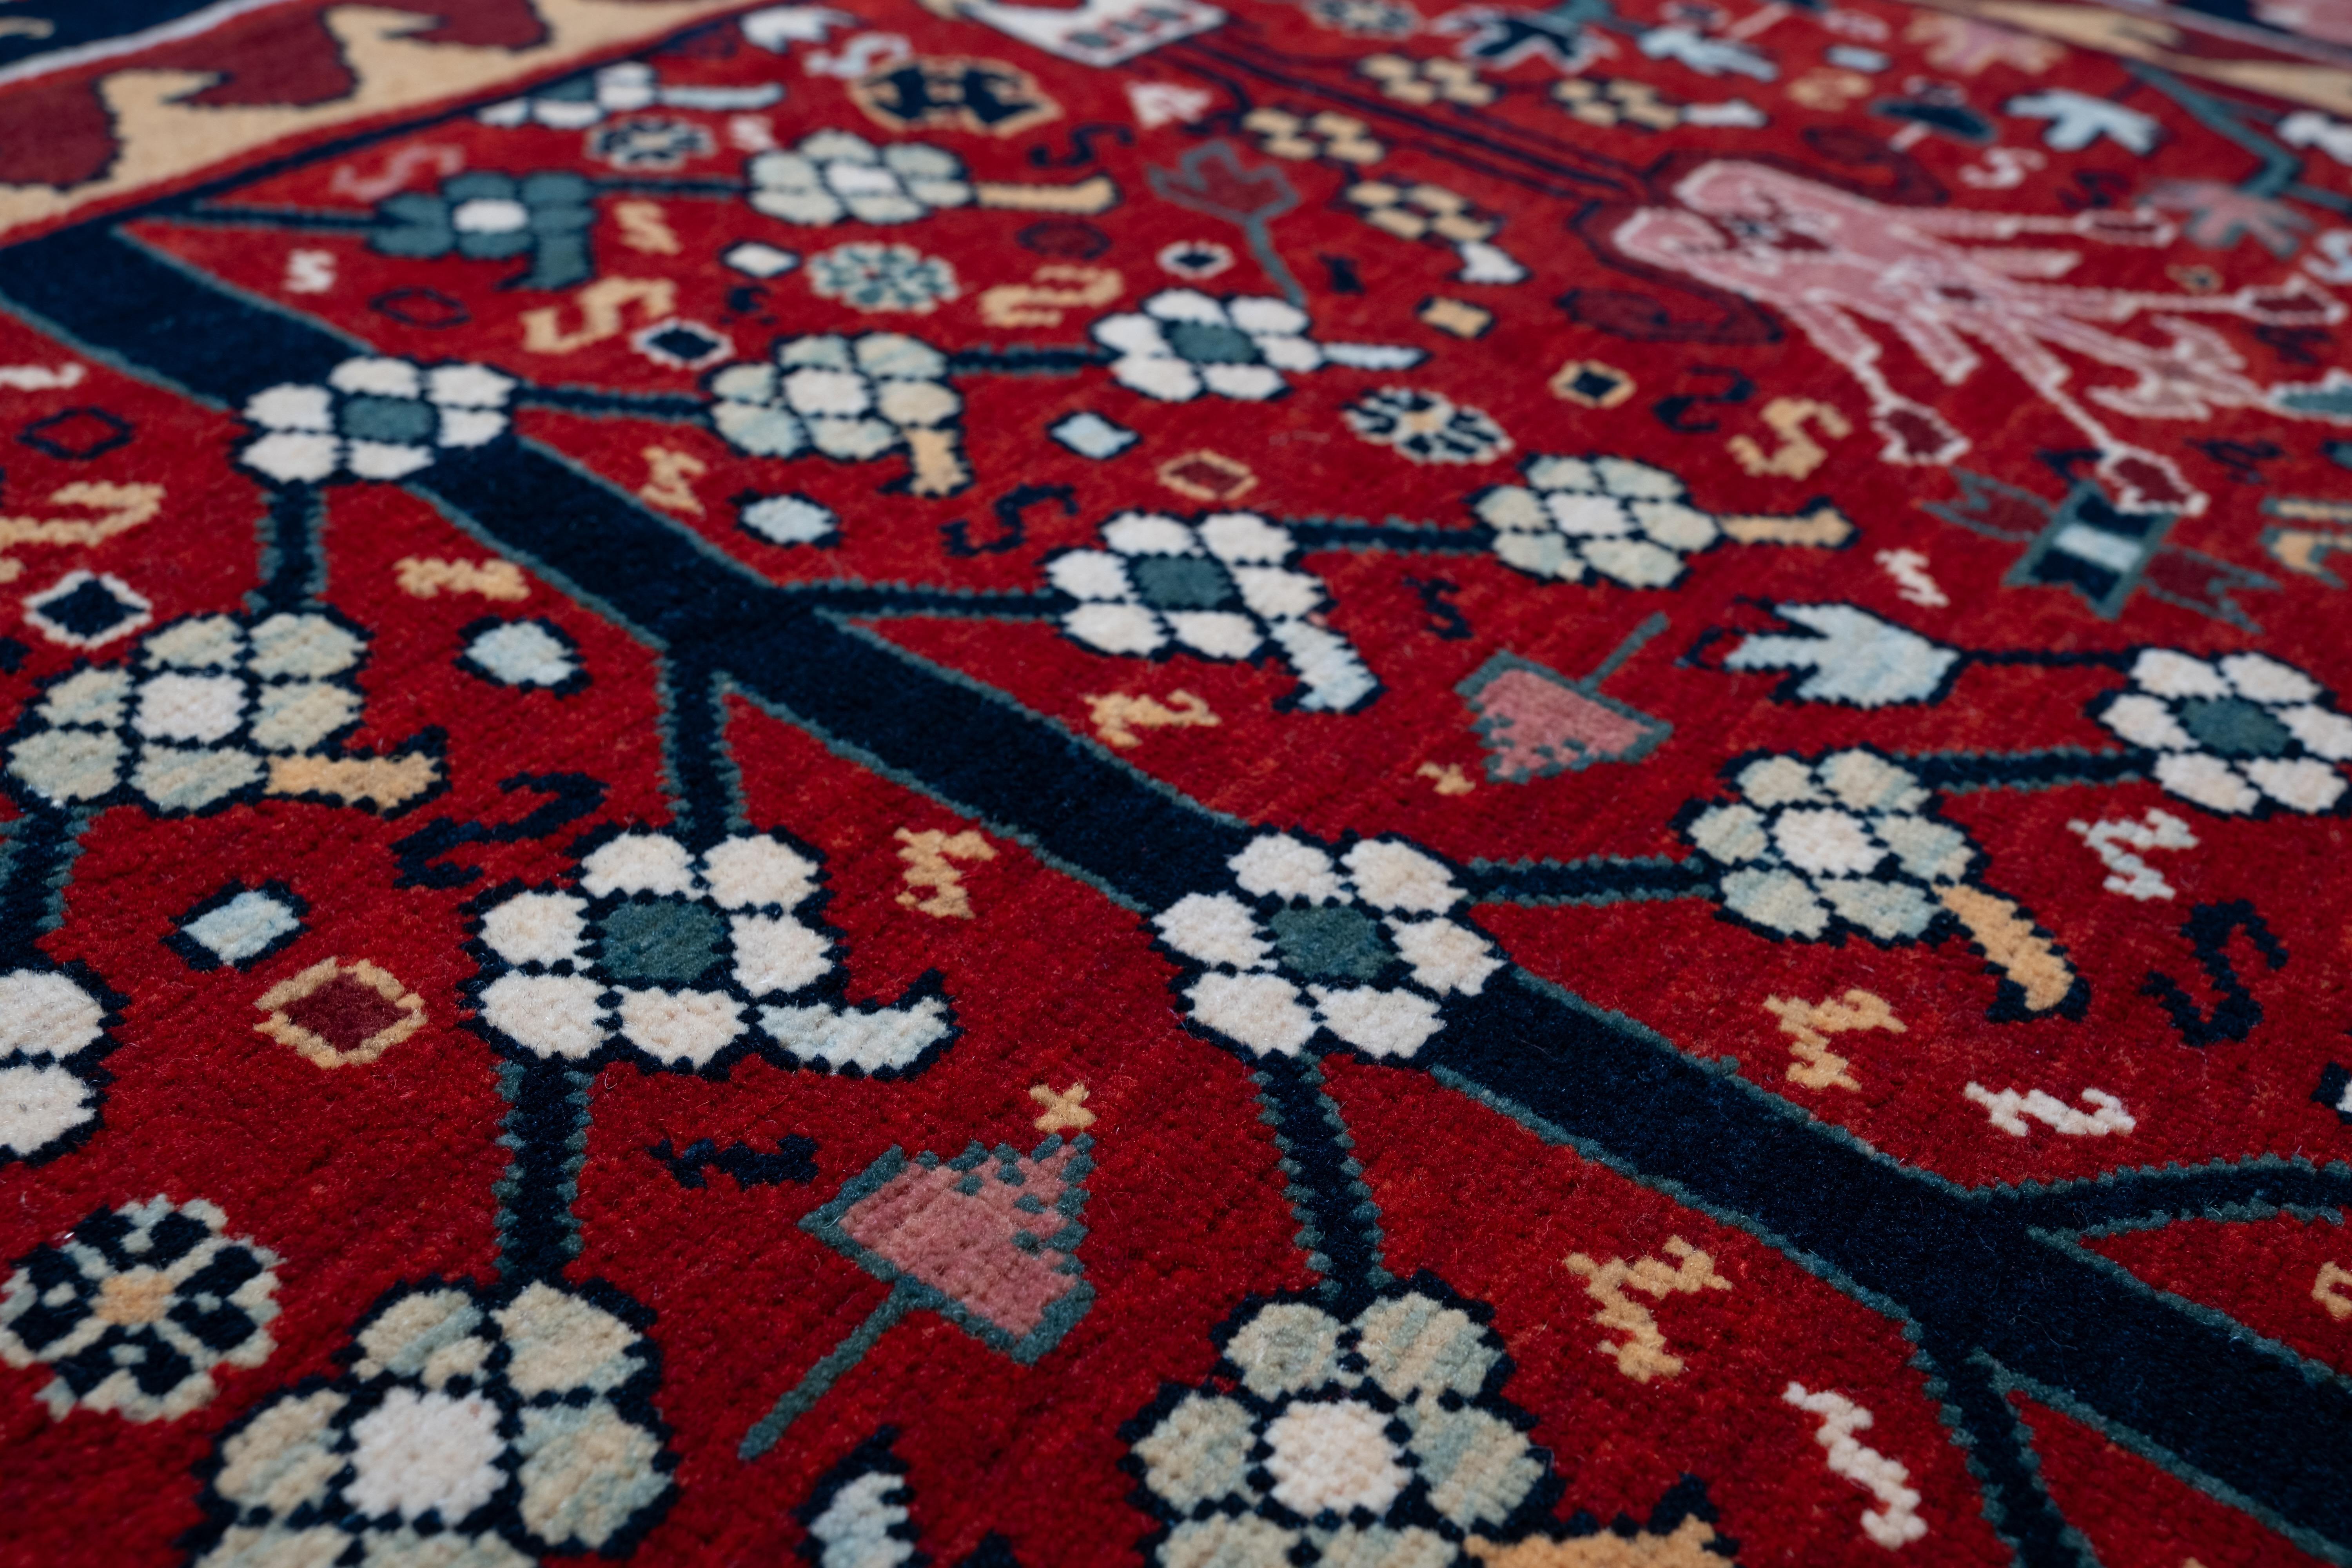 Turkish Ararat Rugs Bid Majnum on Red Field Rug, 17th C Revival Carpet, Natural Dyed For Sale